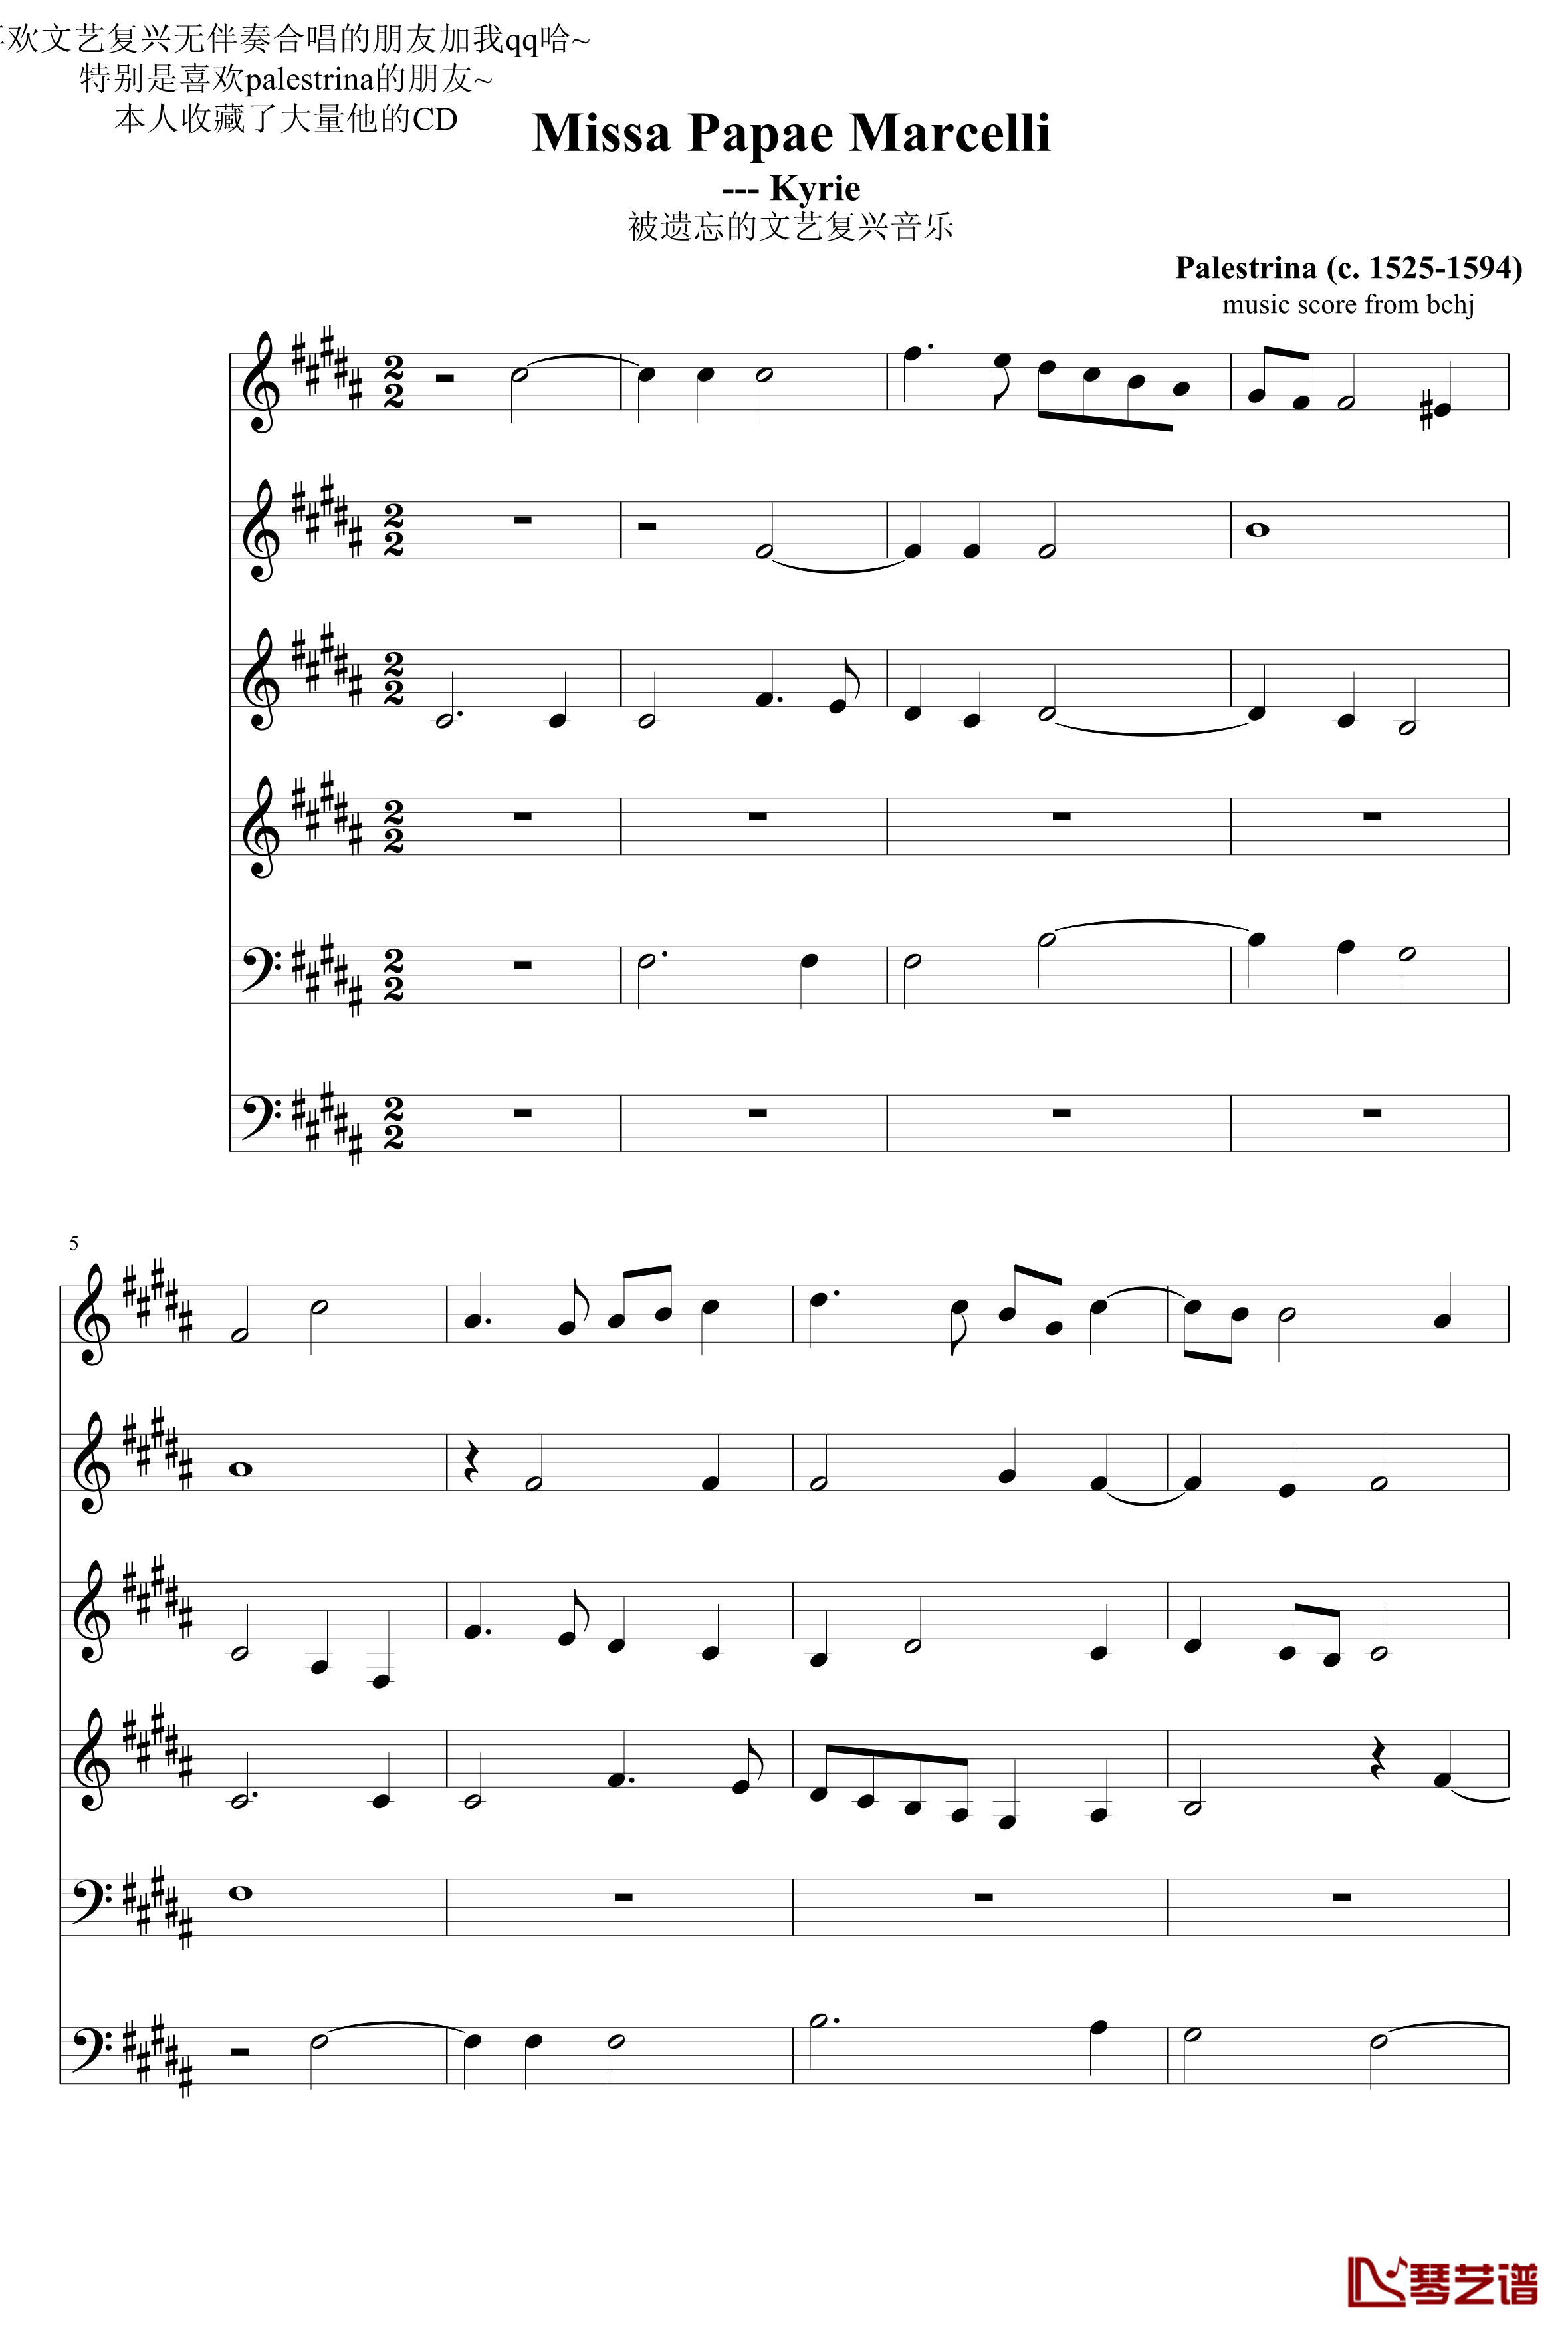 Missa Papae Marcelli钢琴谱-Kyrie-帕莱斯特里那-Palestrina1